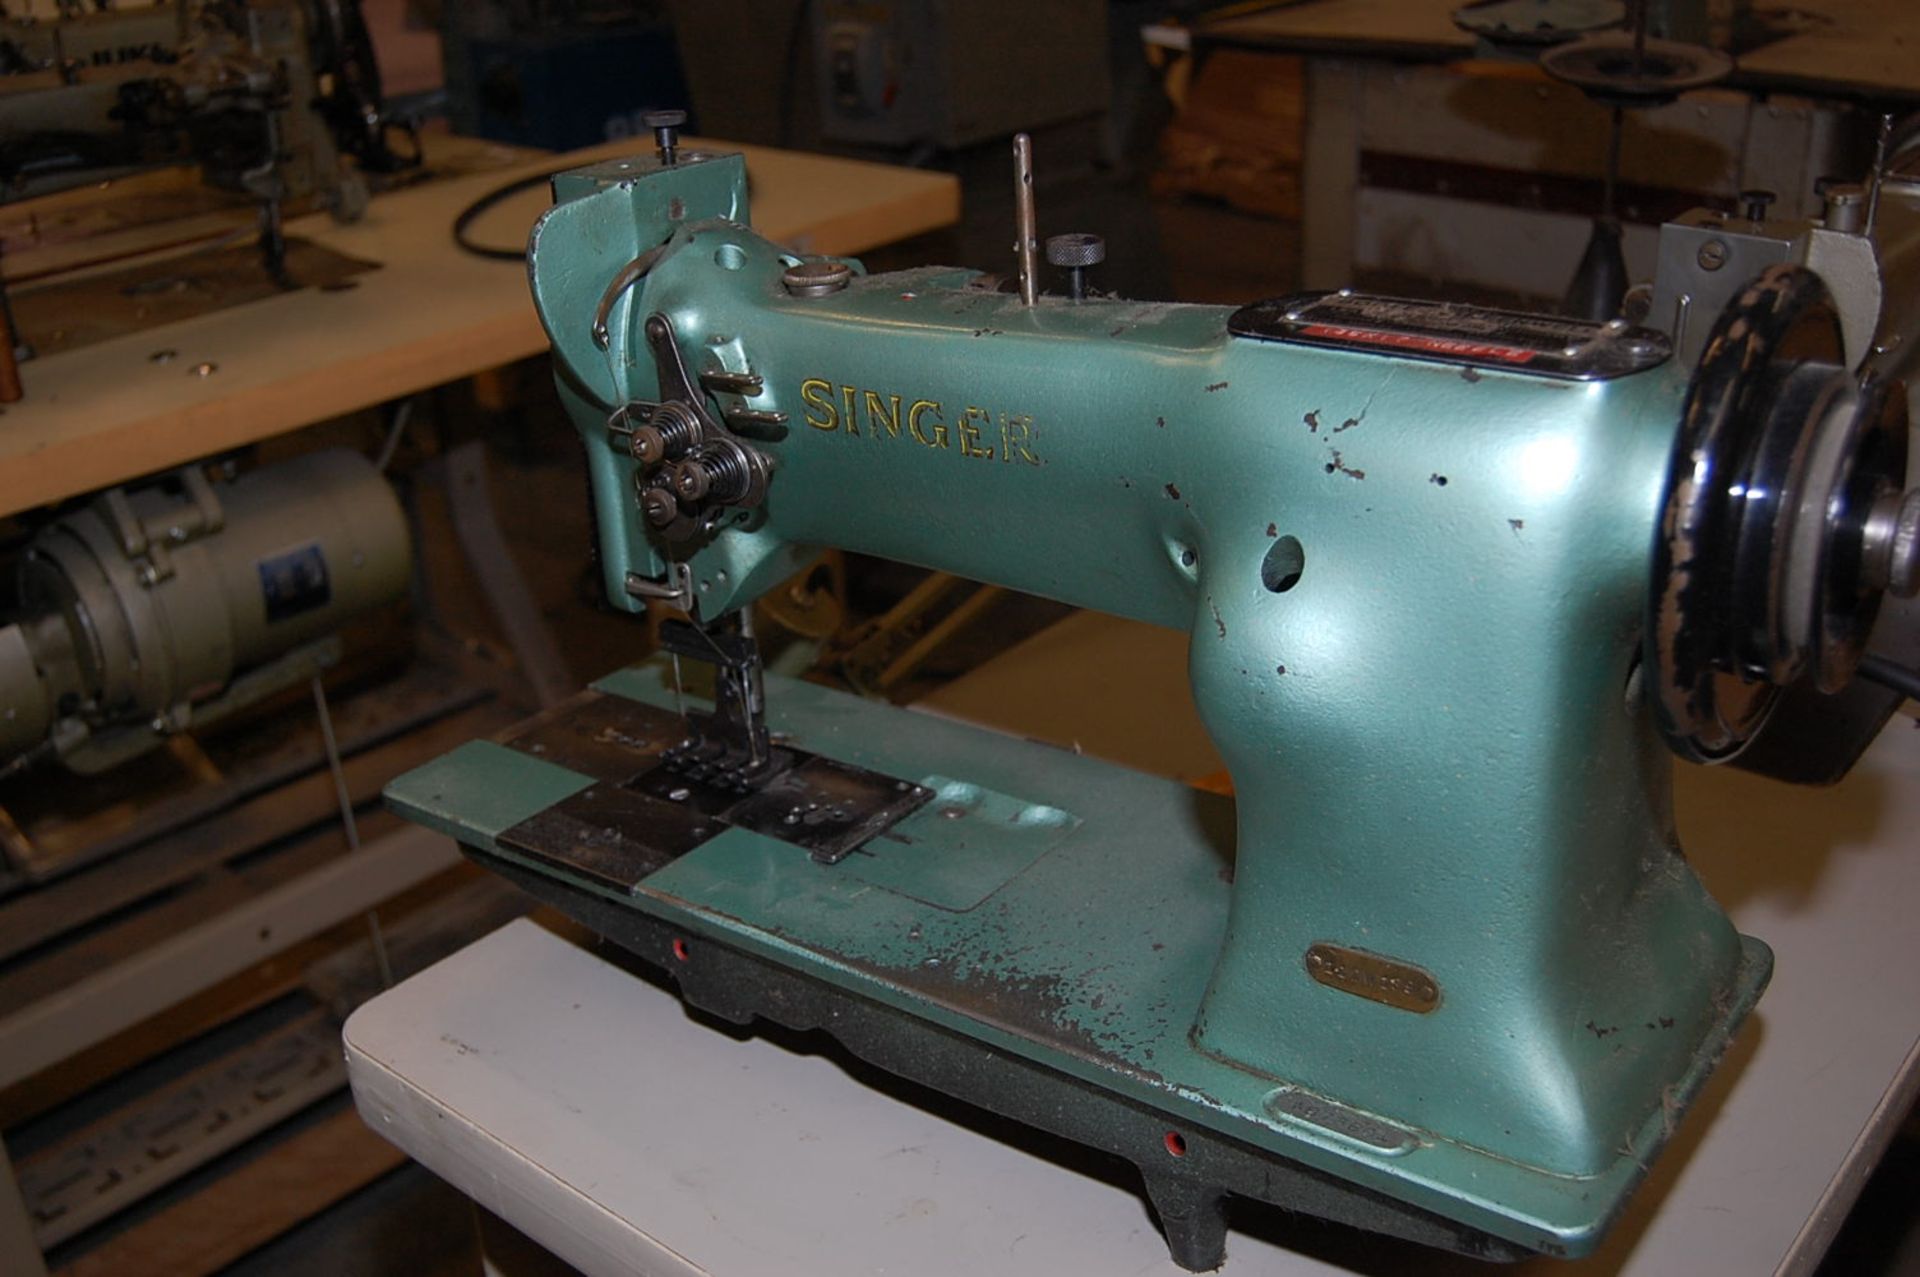 Singer Model #112W139 Sewing Machine, Serial #W873601